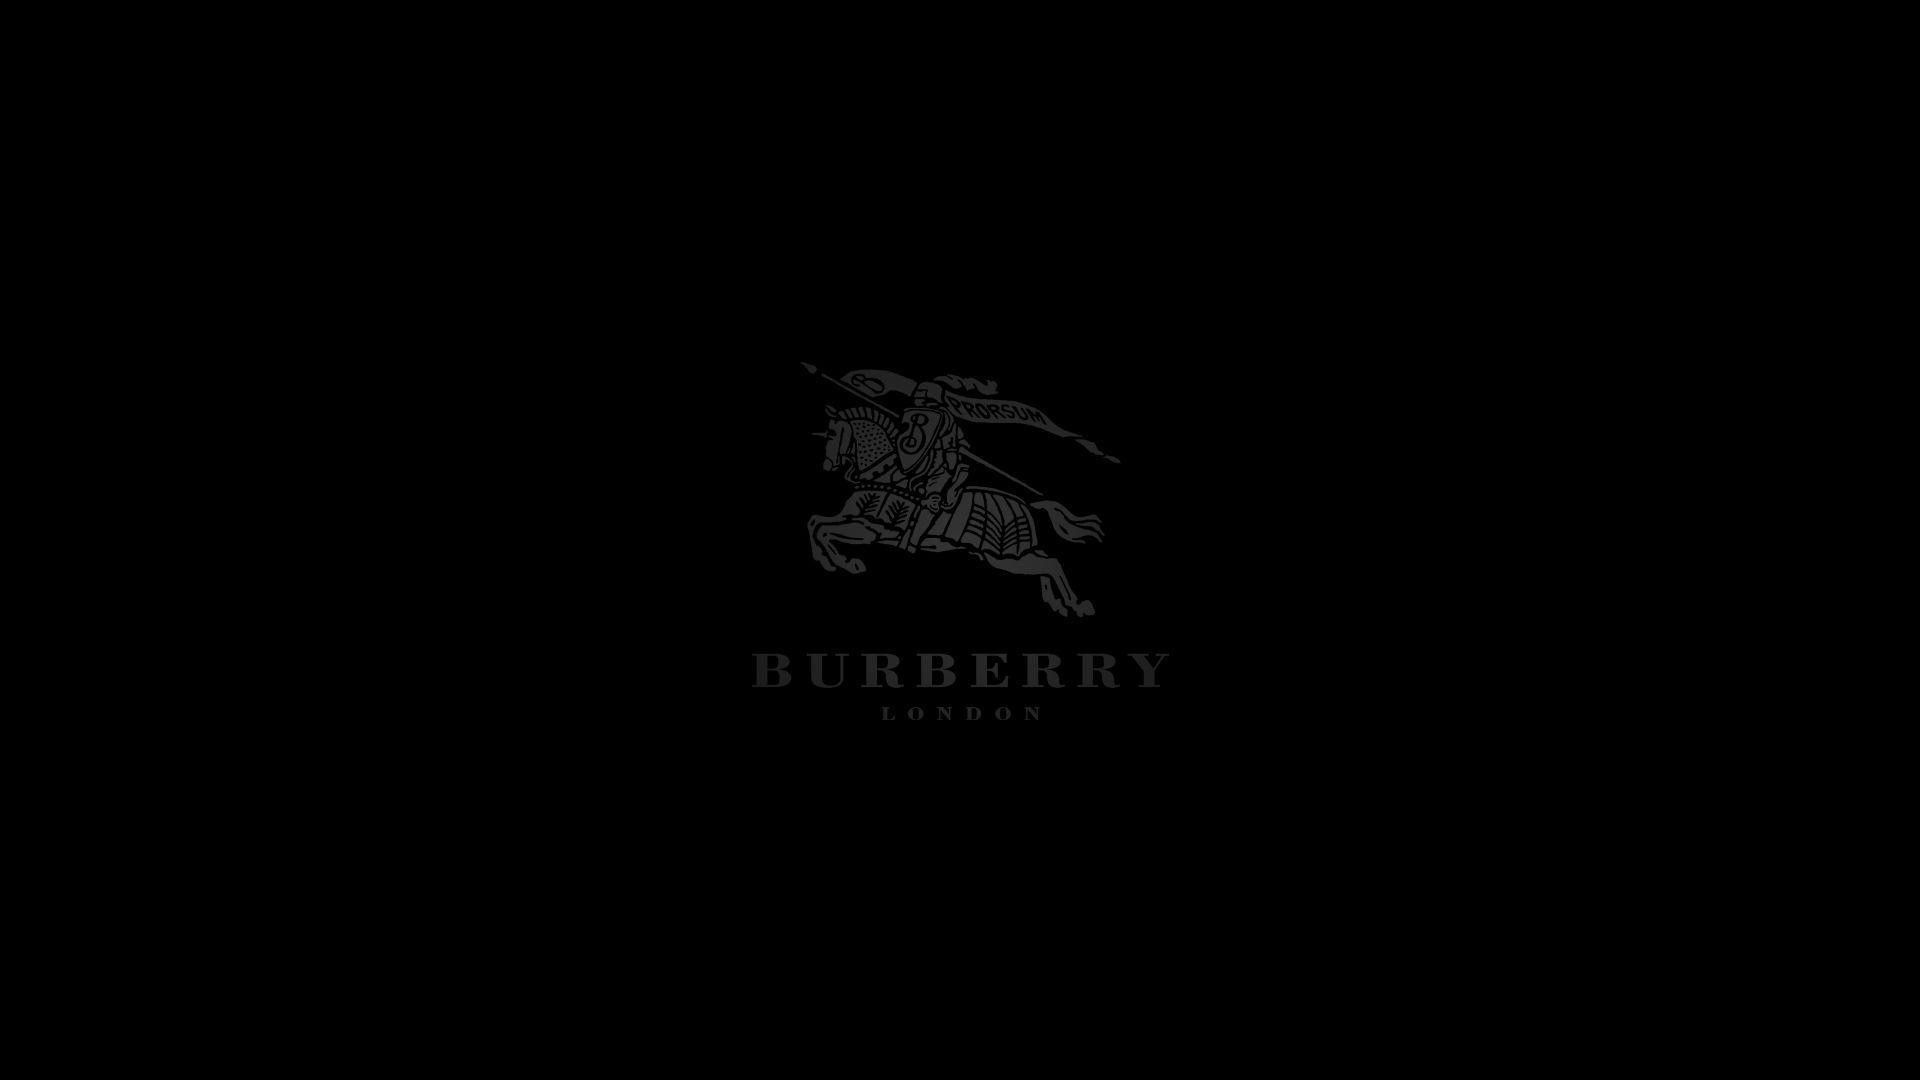 Burberry: A British luxury fashion, The founder: Thomas Burberry, Monochrome. 1920x1080 Full HD Wallpaper.